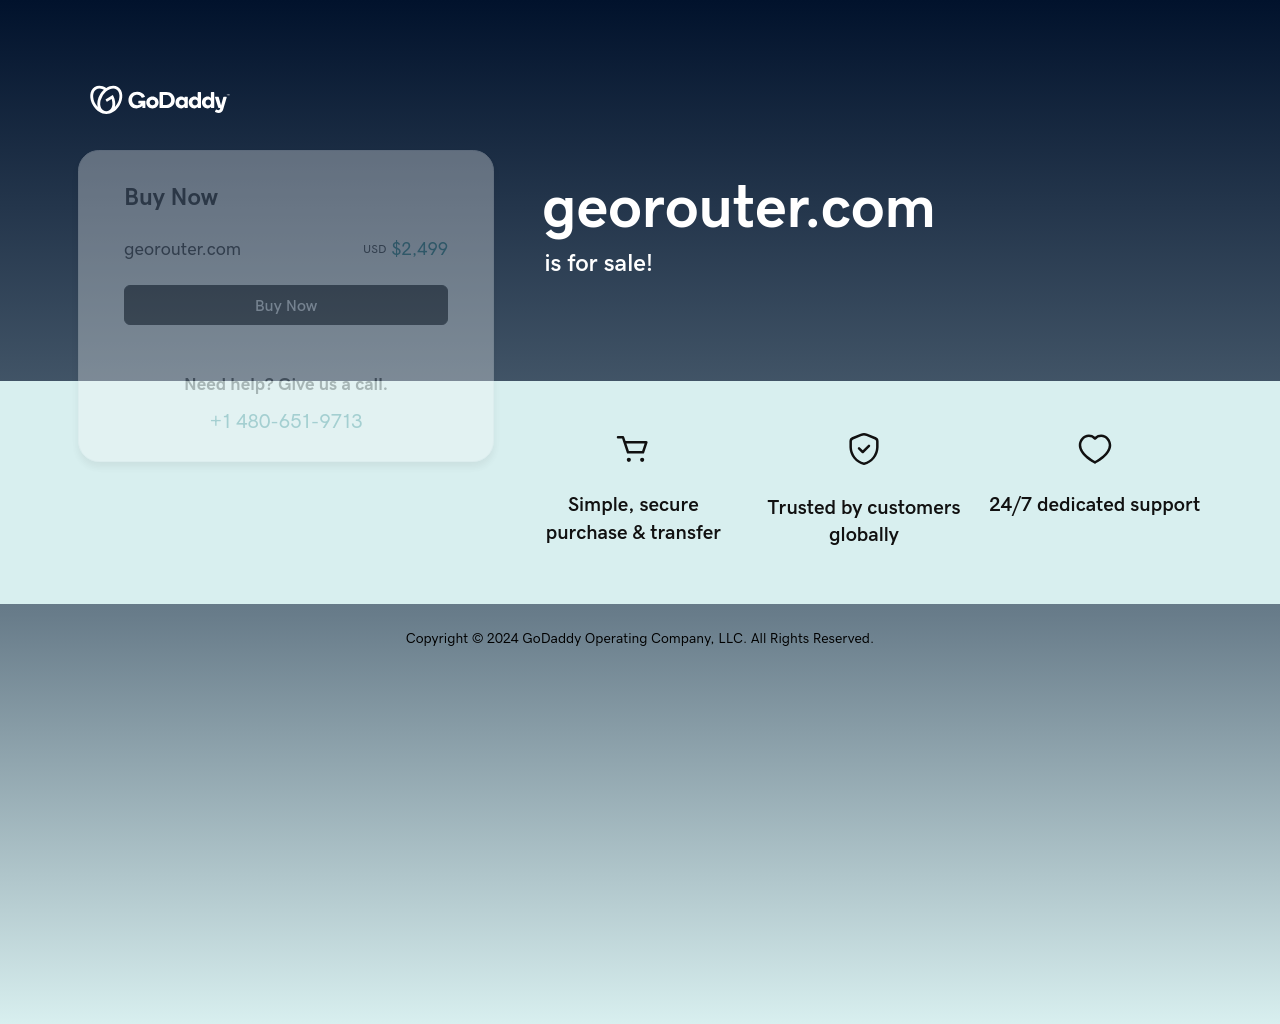 georouter.com